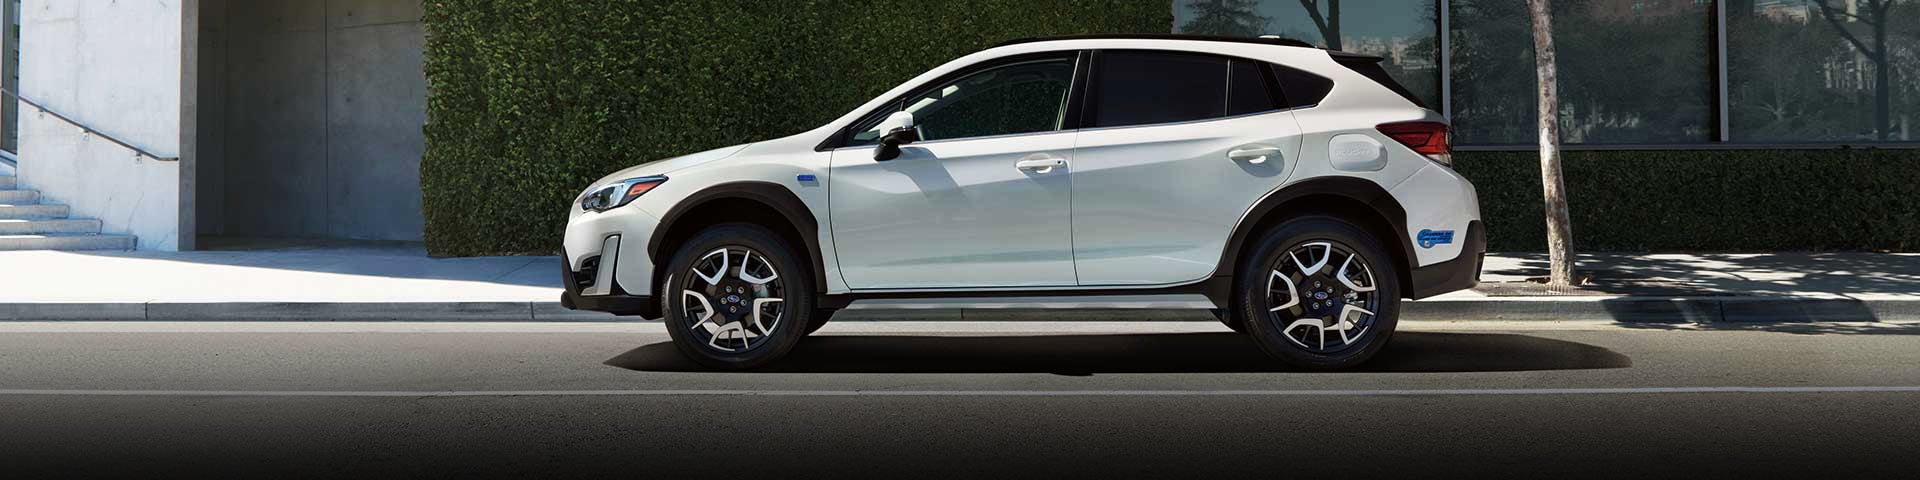 The side profile of a white Subaru Crosstrek Hybrid | Sunset Hills Subaru in Sunset Hills MO